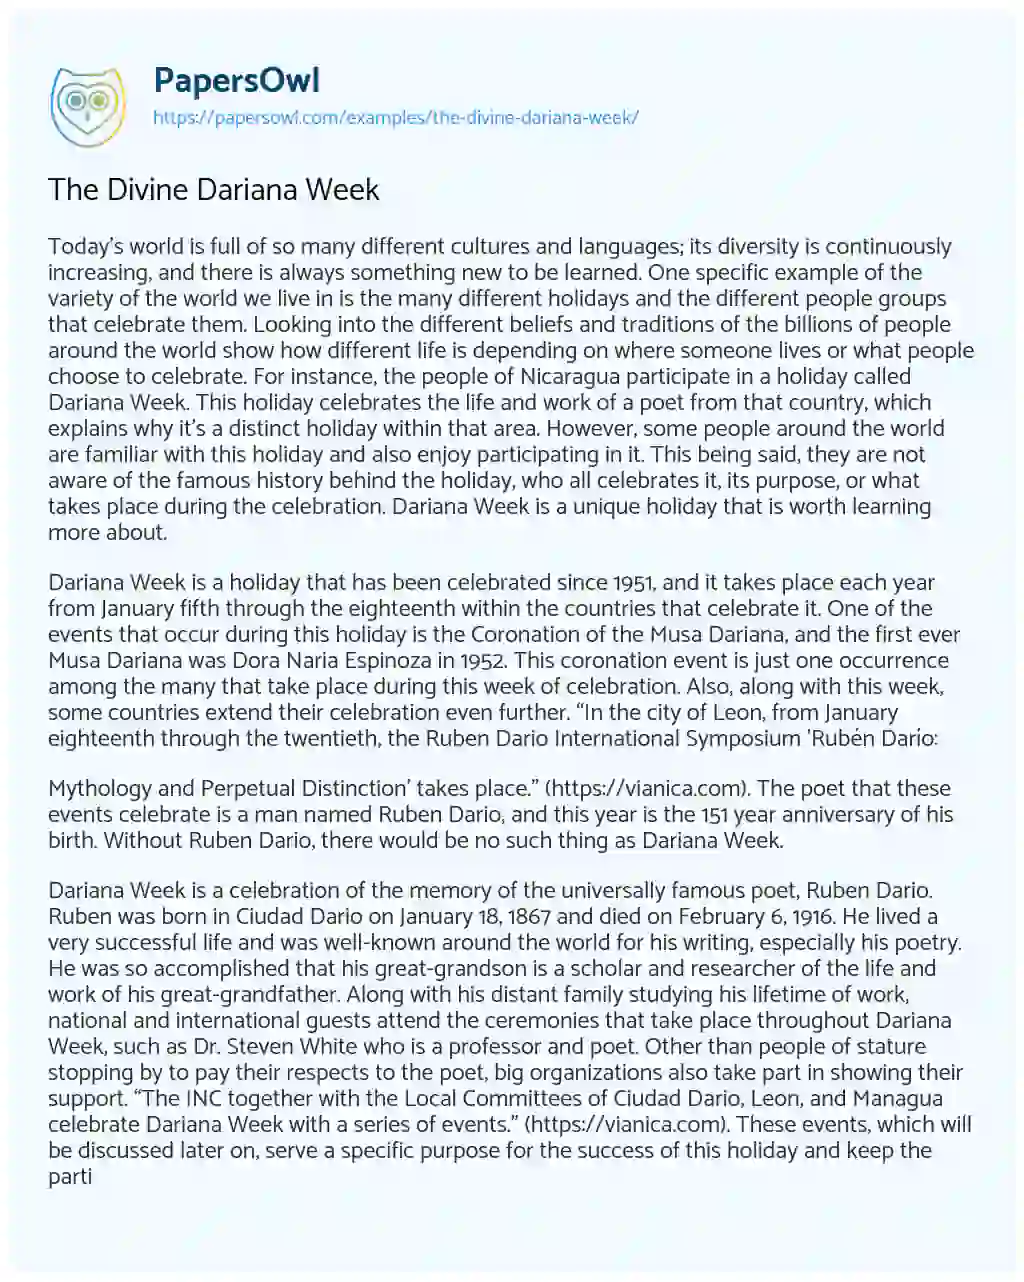 Essay on The Divine Dariana Week 